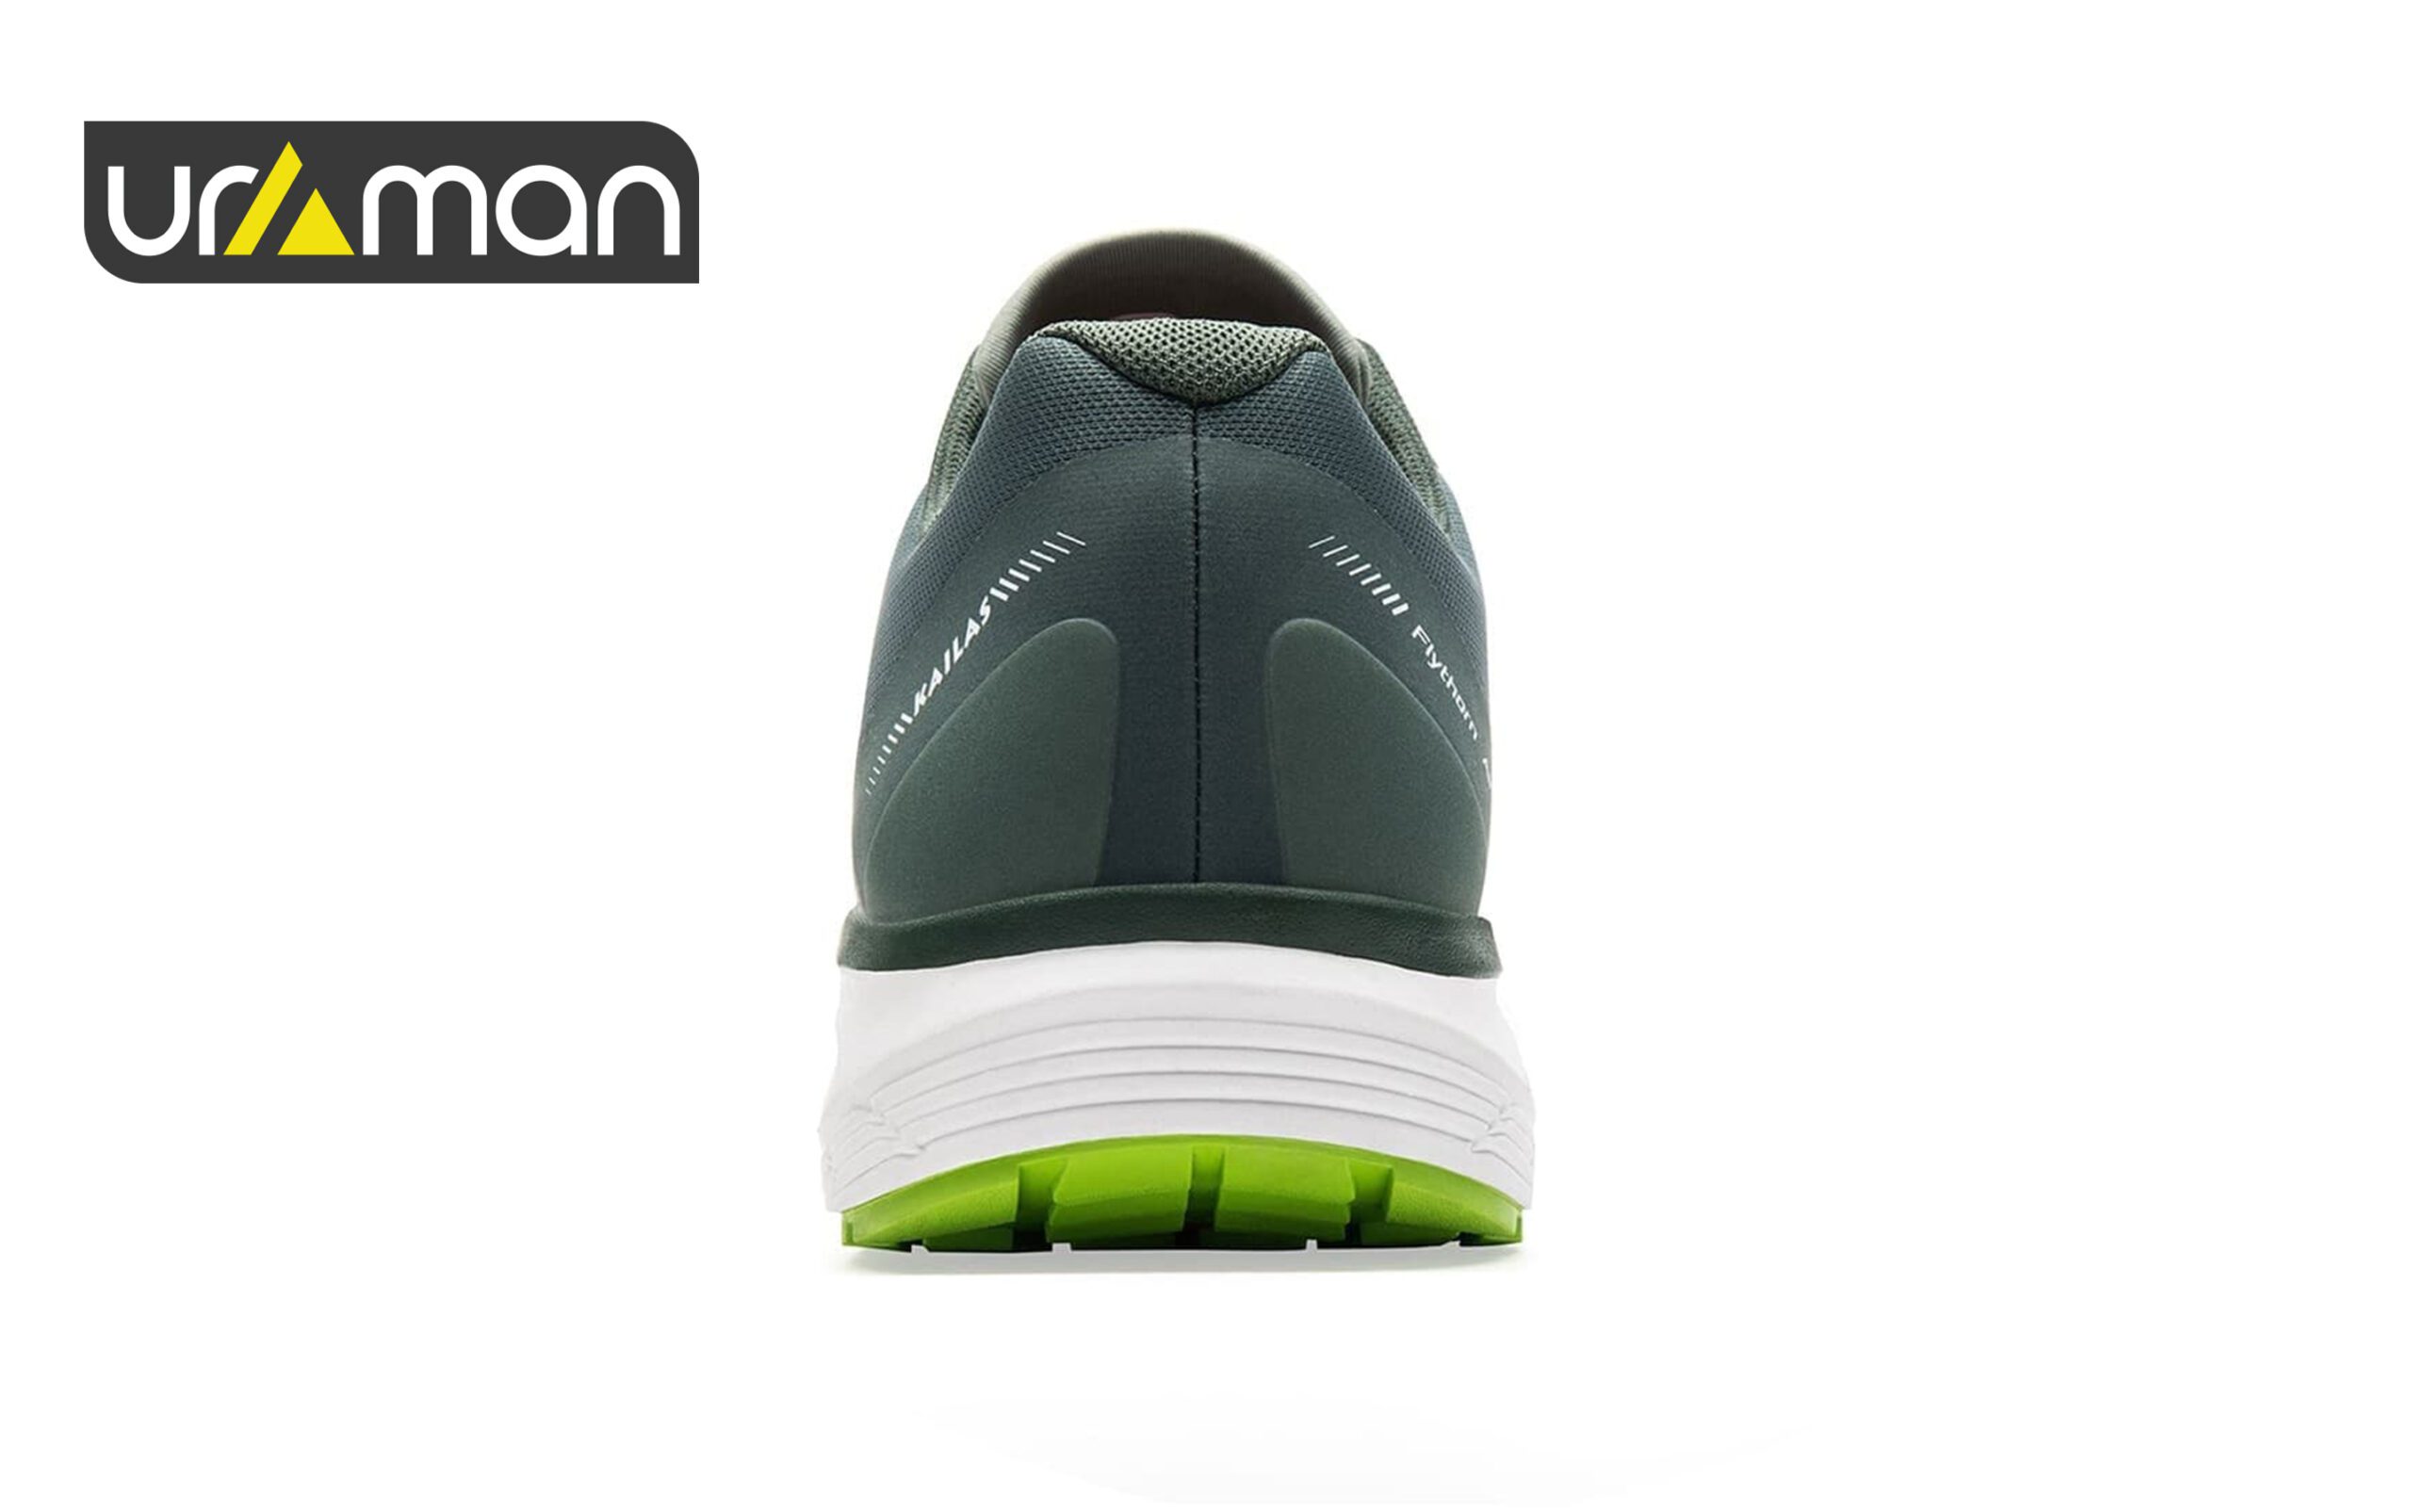 کفش مردانه رانینگ کایلاس مدل Flythorn Air Trail Running Shoes Men’s کدمحصول: KS203103